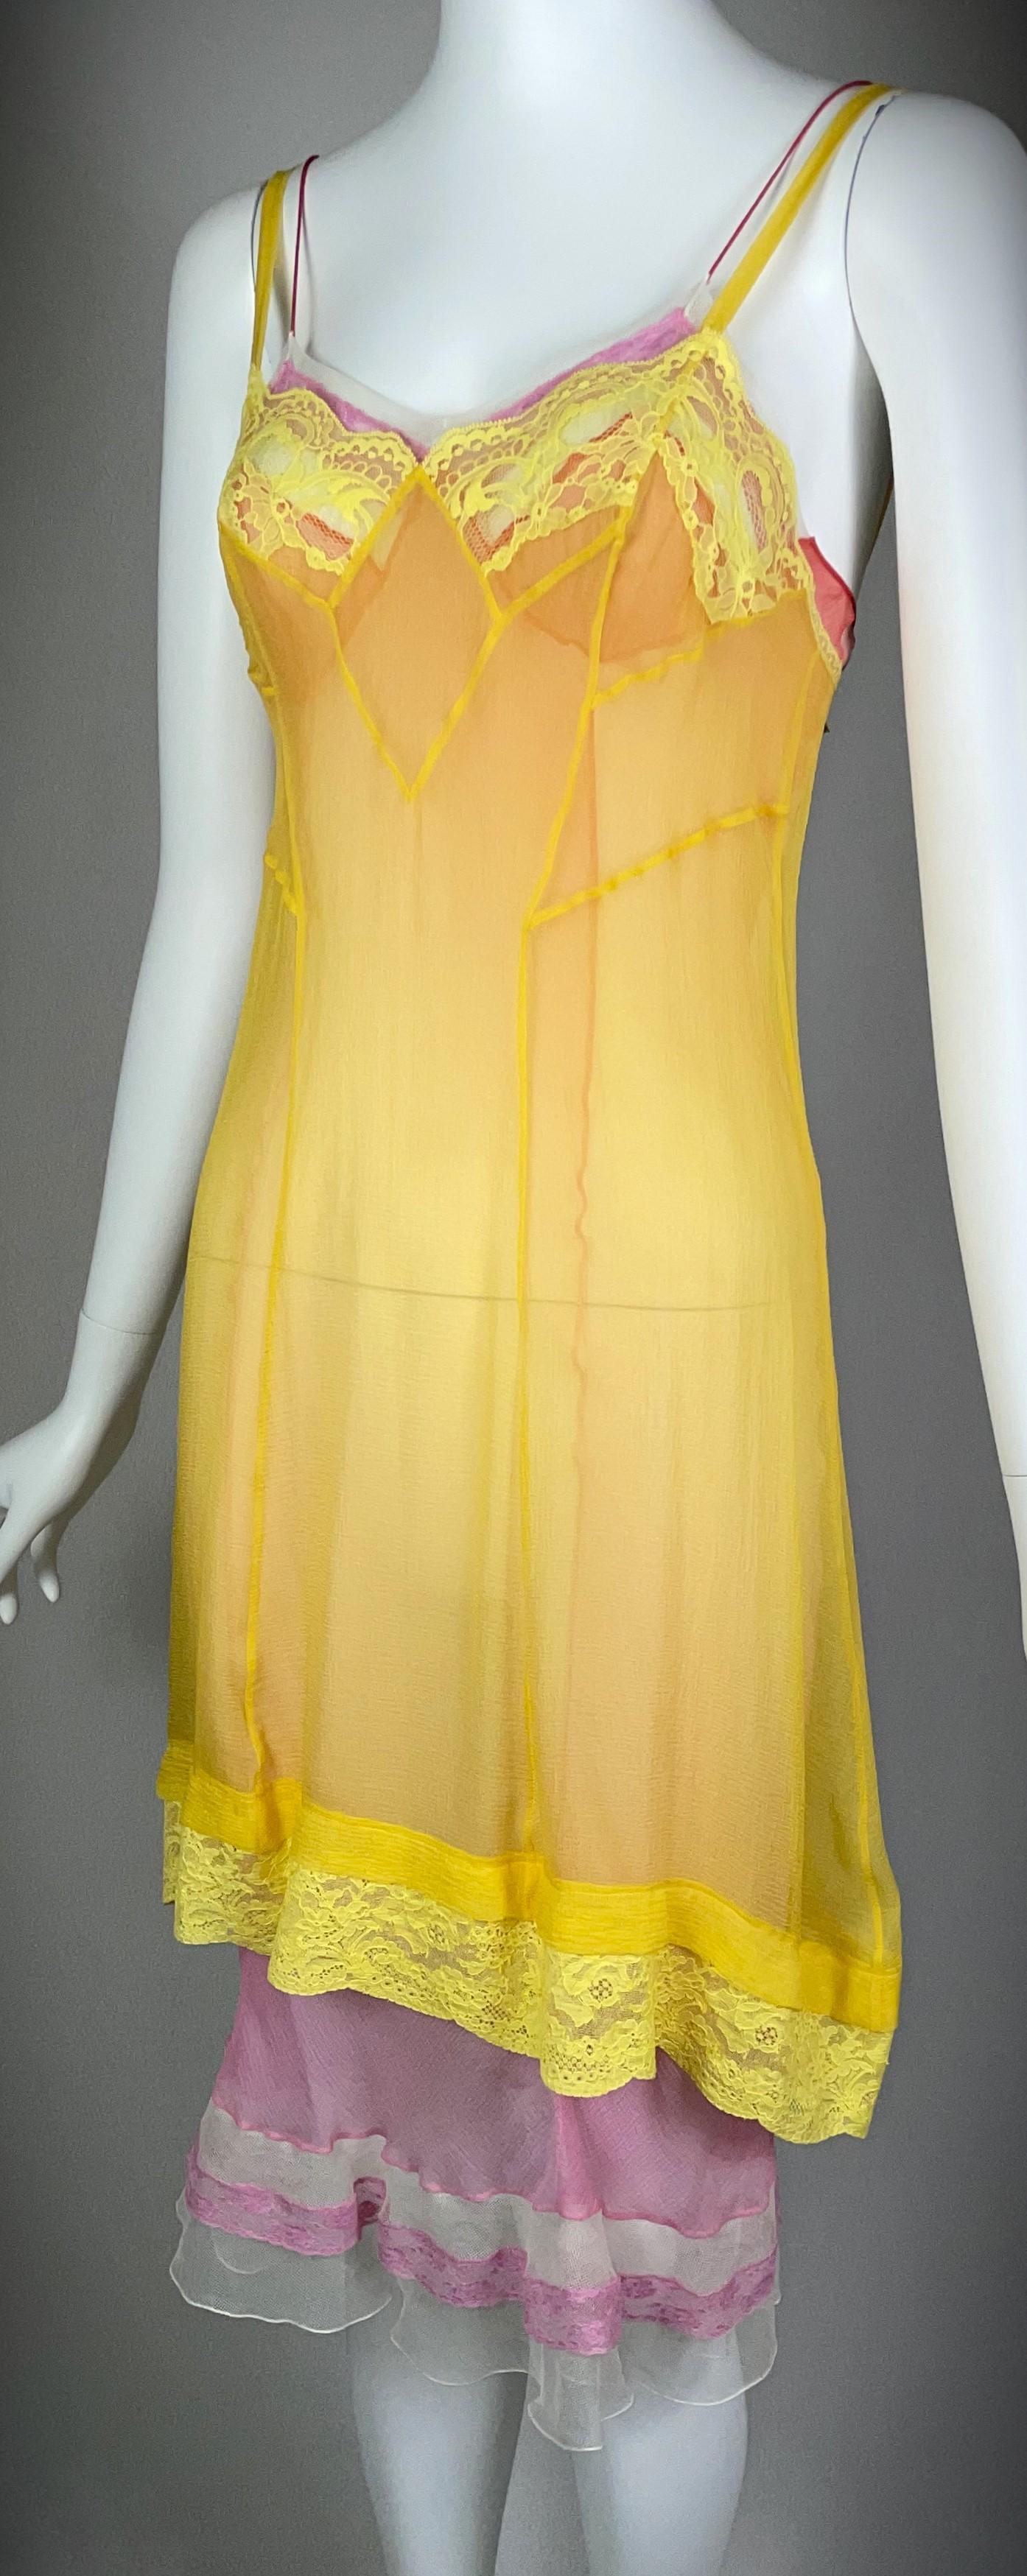 S/S 2005 Christian Dior by John Galliano Runway Sheer Pink & Yellow Silk Dress In Good Condition In Yukon, OK